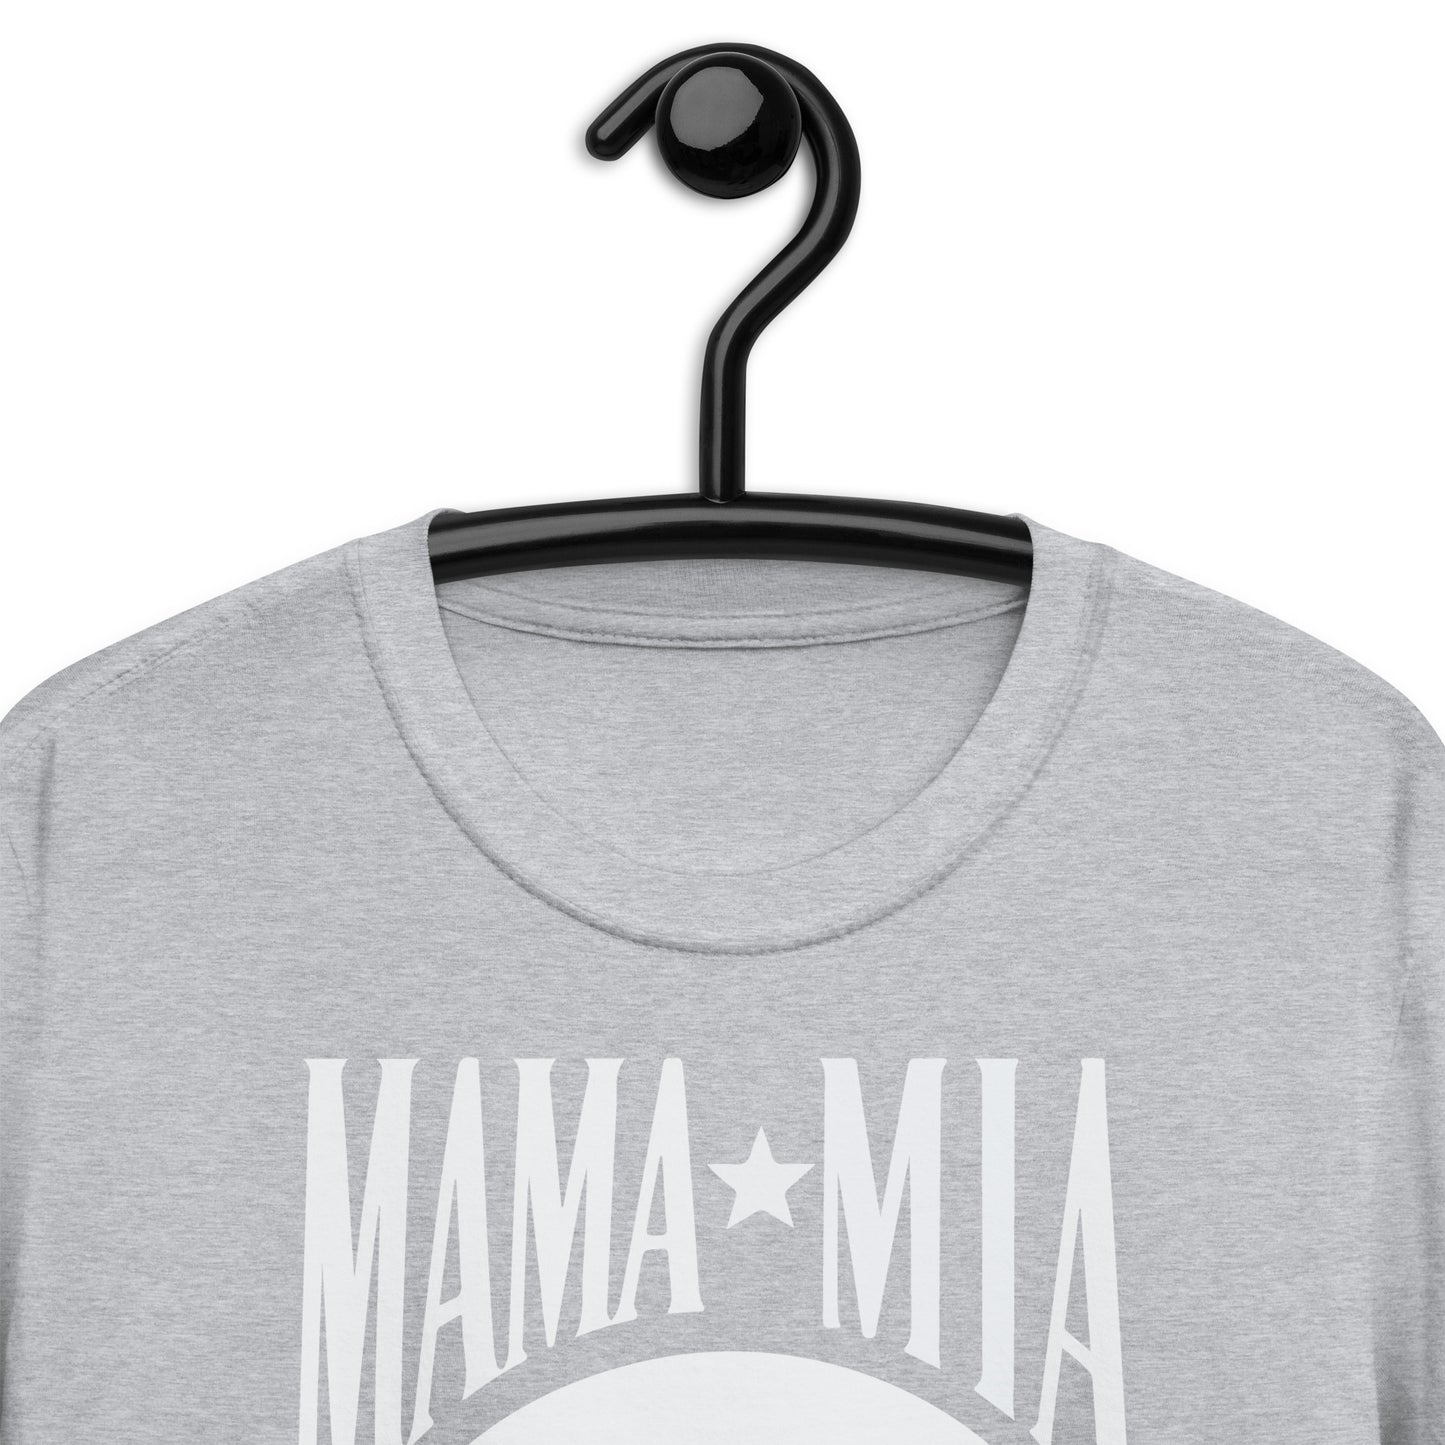 Mama Mia. Short-Sleeve Unisex T-Shirt